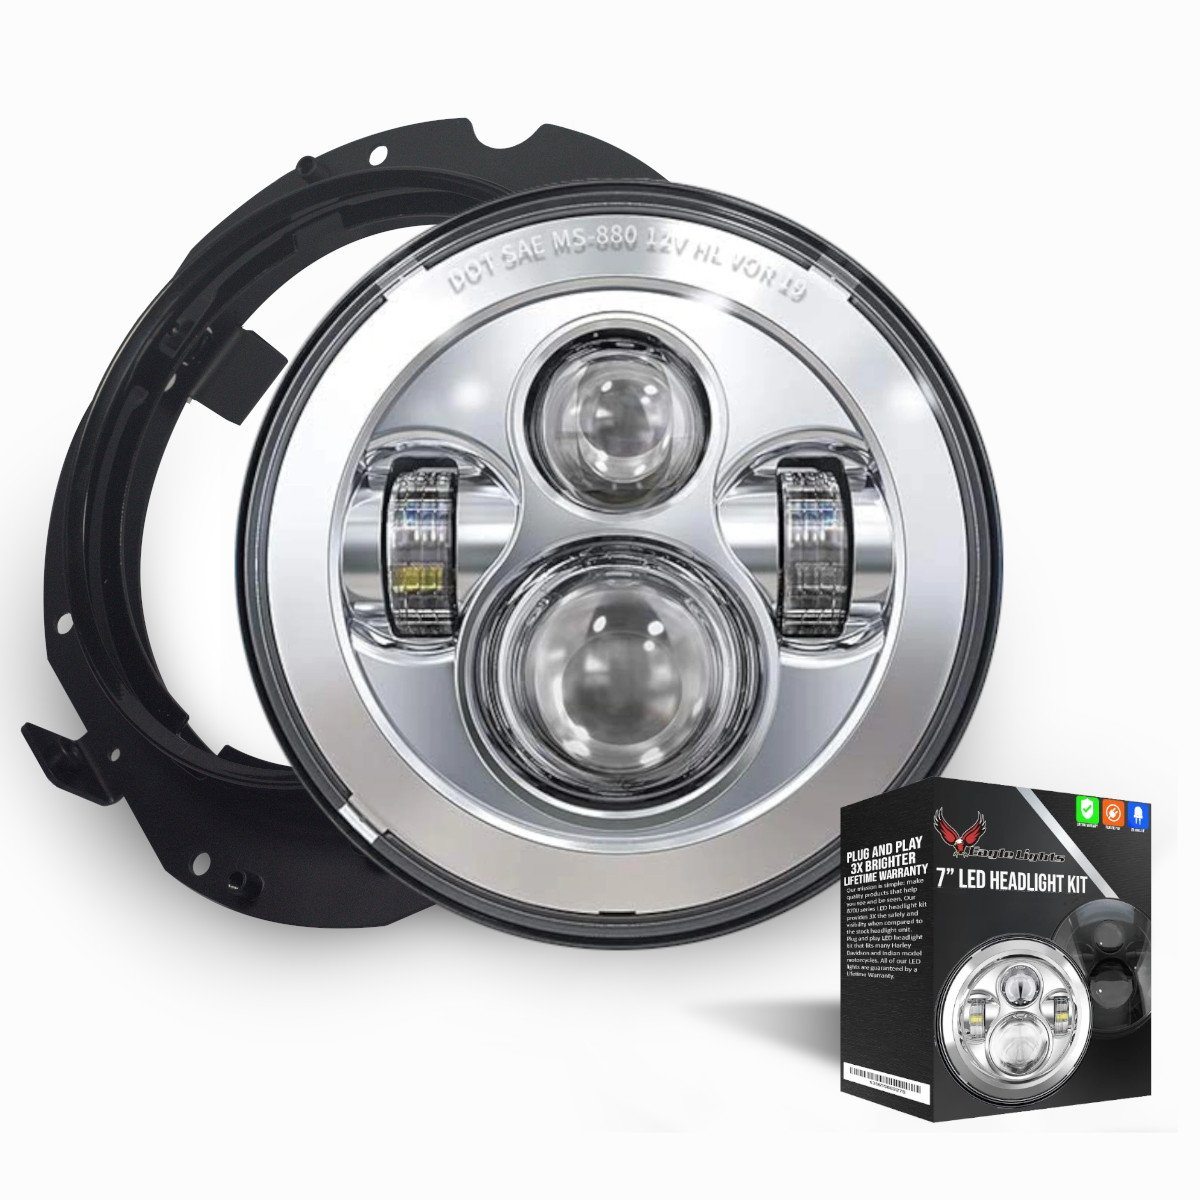 Eagle Lights 7" LED Headlight and Installation Ring for Kawasaki Voyager and Vaquero